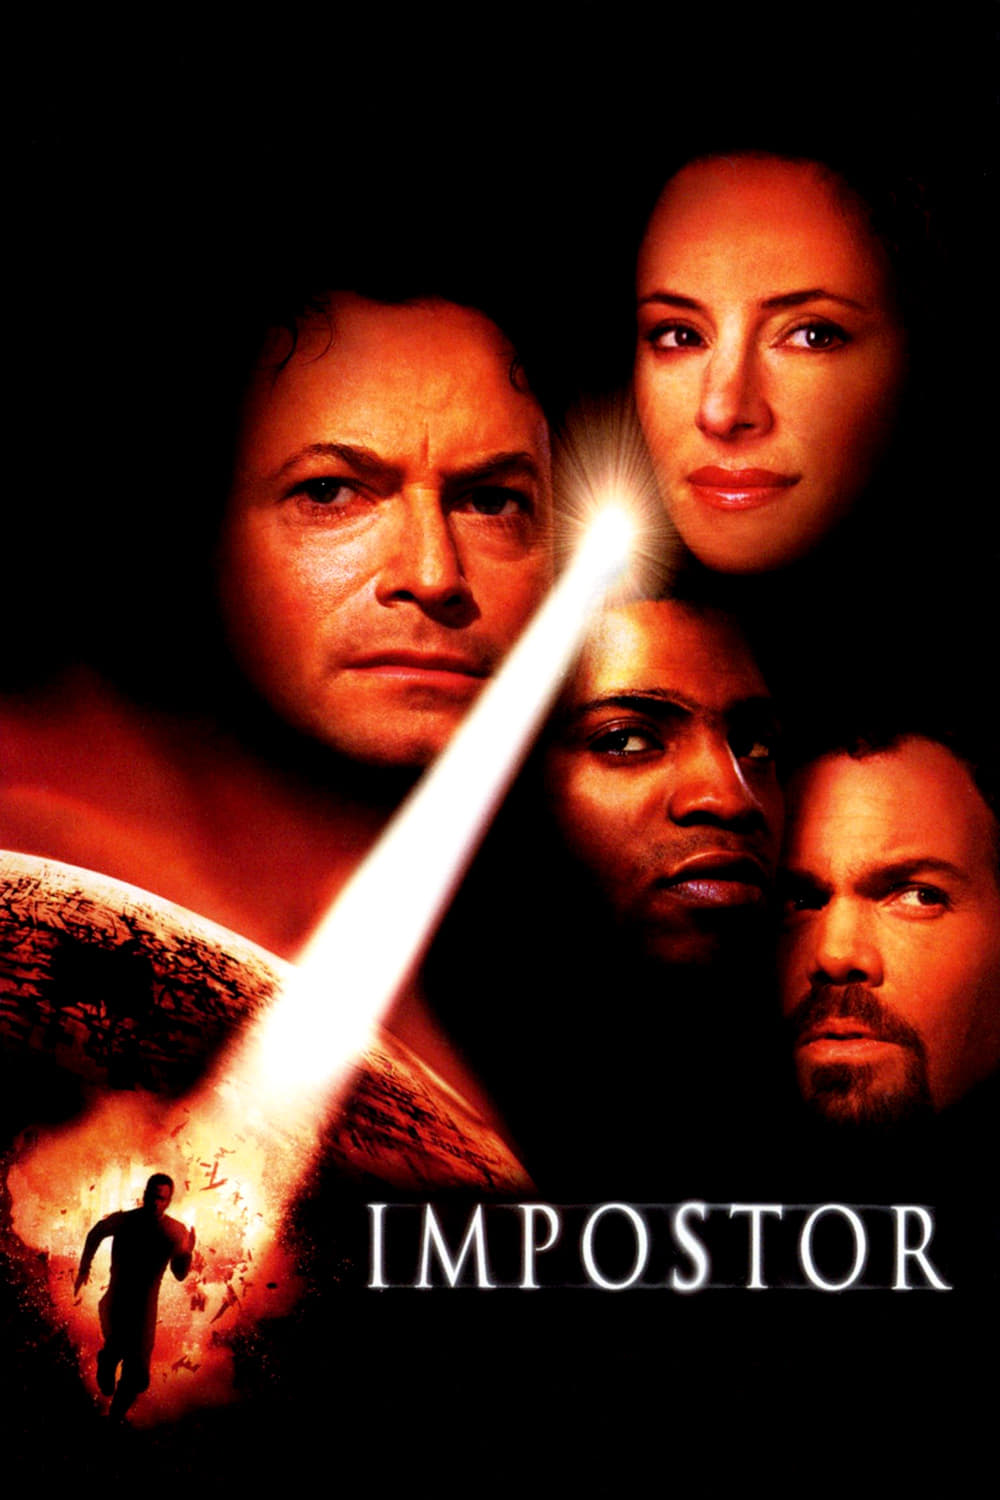 Impostor [HD] (2002)